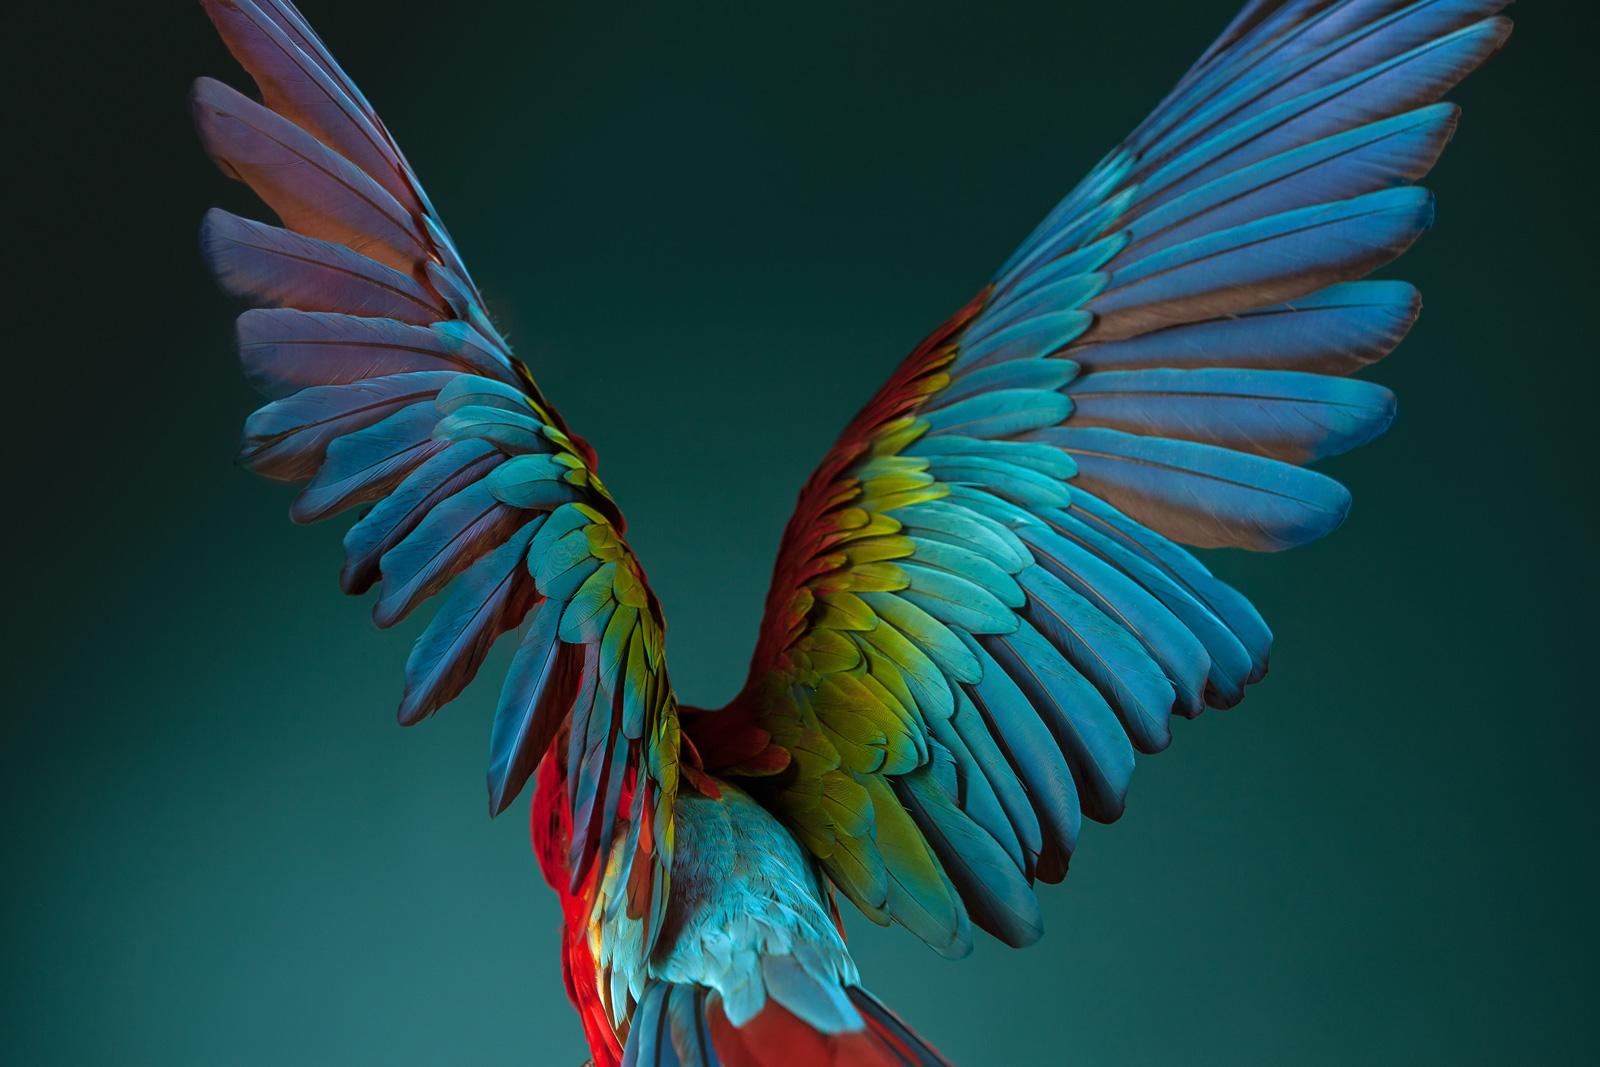 Tim Platt Still-Life Photograph - "Macaw #3”-Signed limited edition still life print, Blue bird, Animal, Contemporary